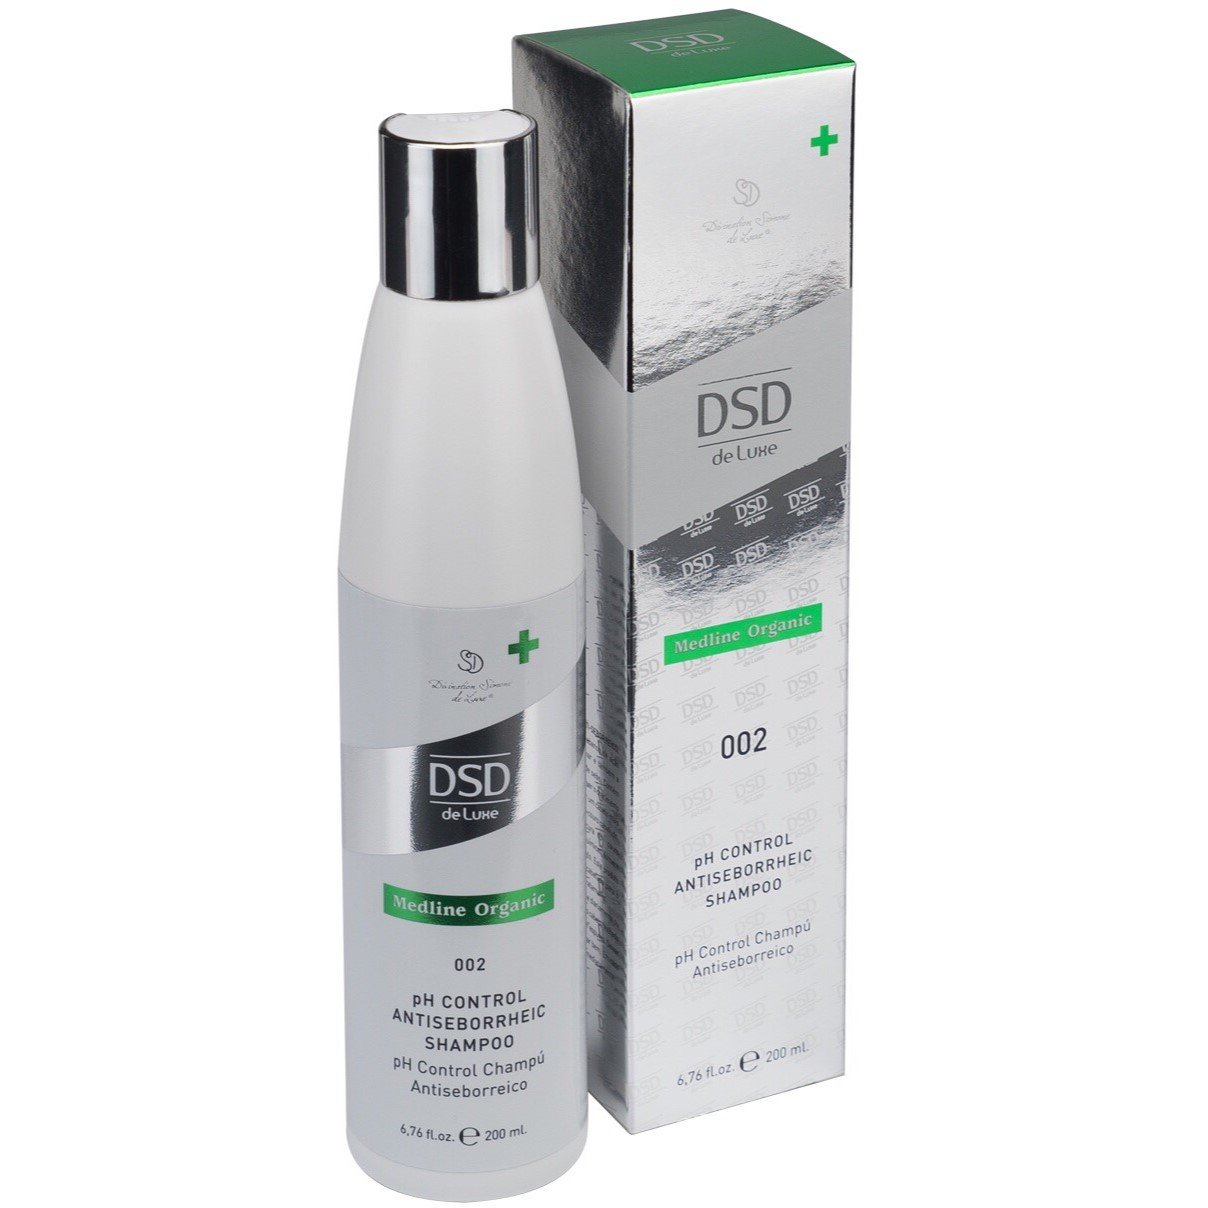 Антисеборейний шампунь DSD Luxe 002 Medline Organic pH Control Antiseborrheic Shampoo, 200 мл - фото 1